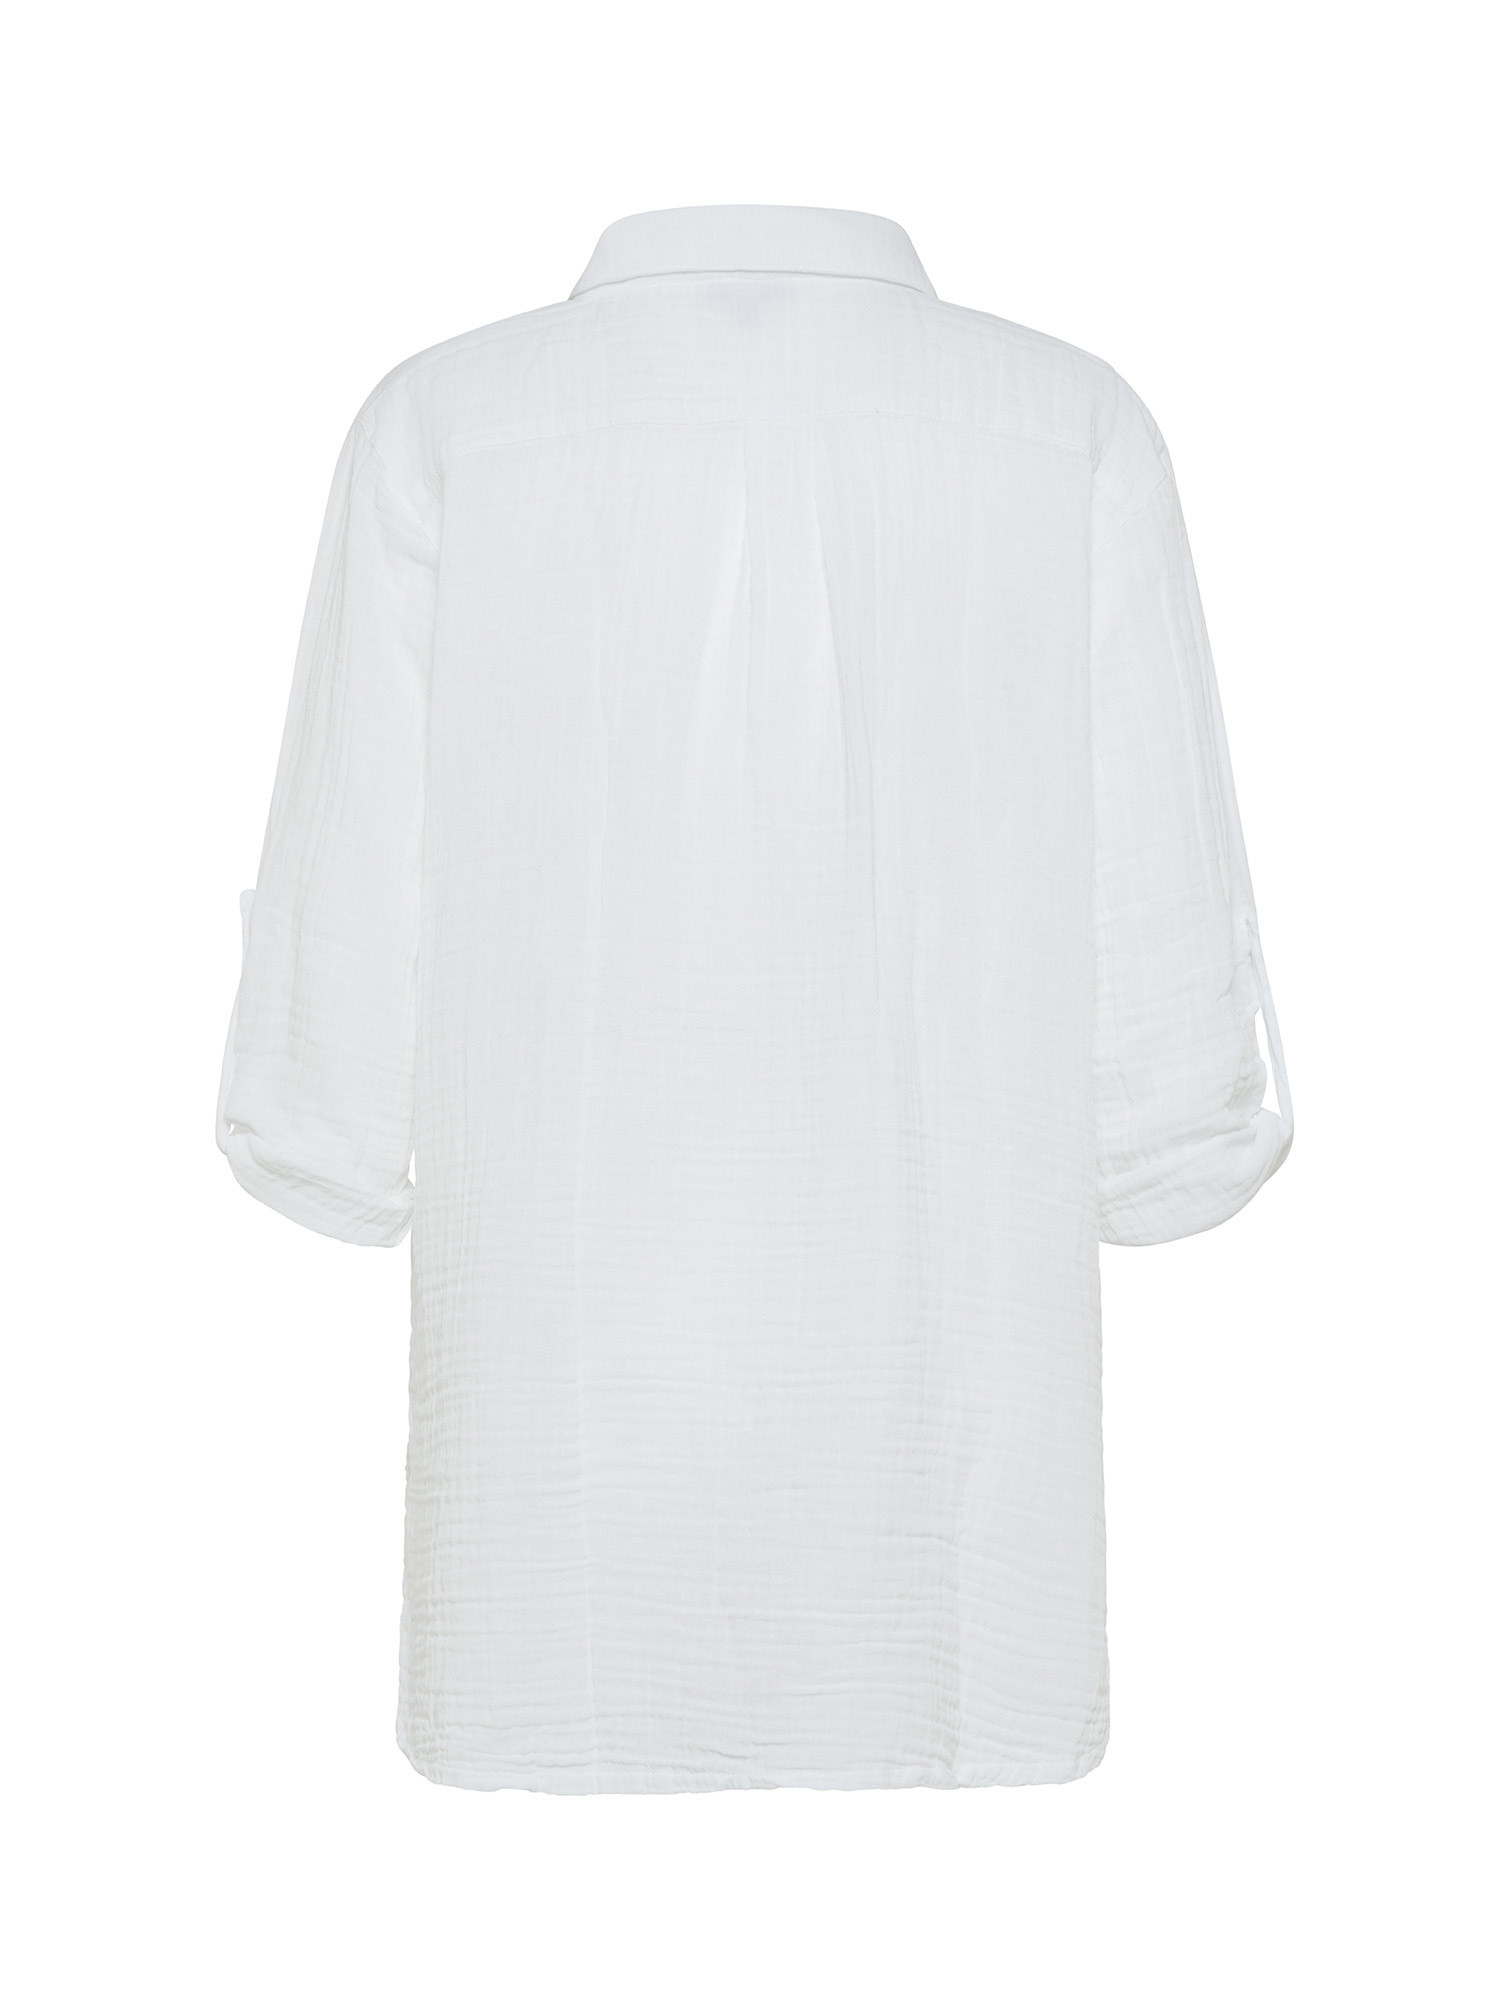 Camicia lunga in mussola maniche a 3/4, Bianco, large image number 1